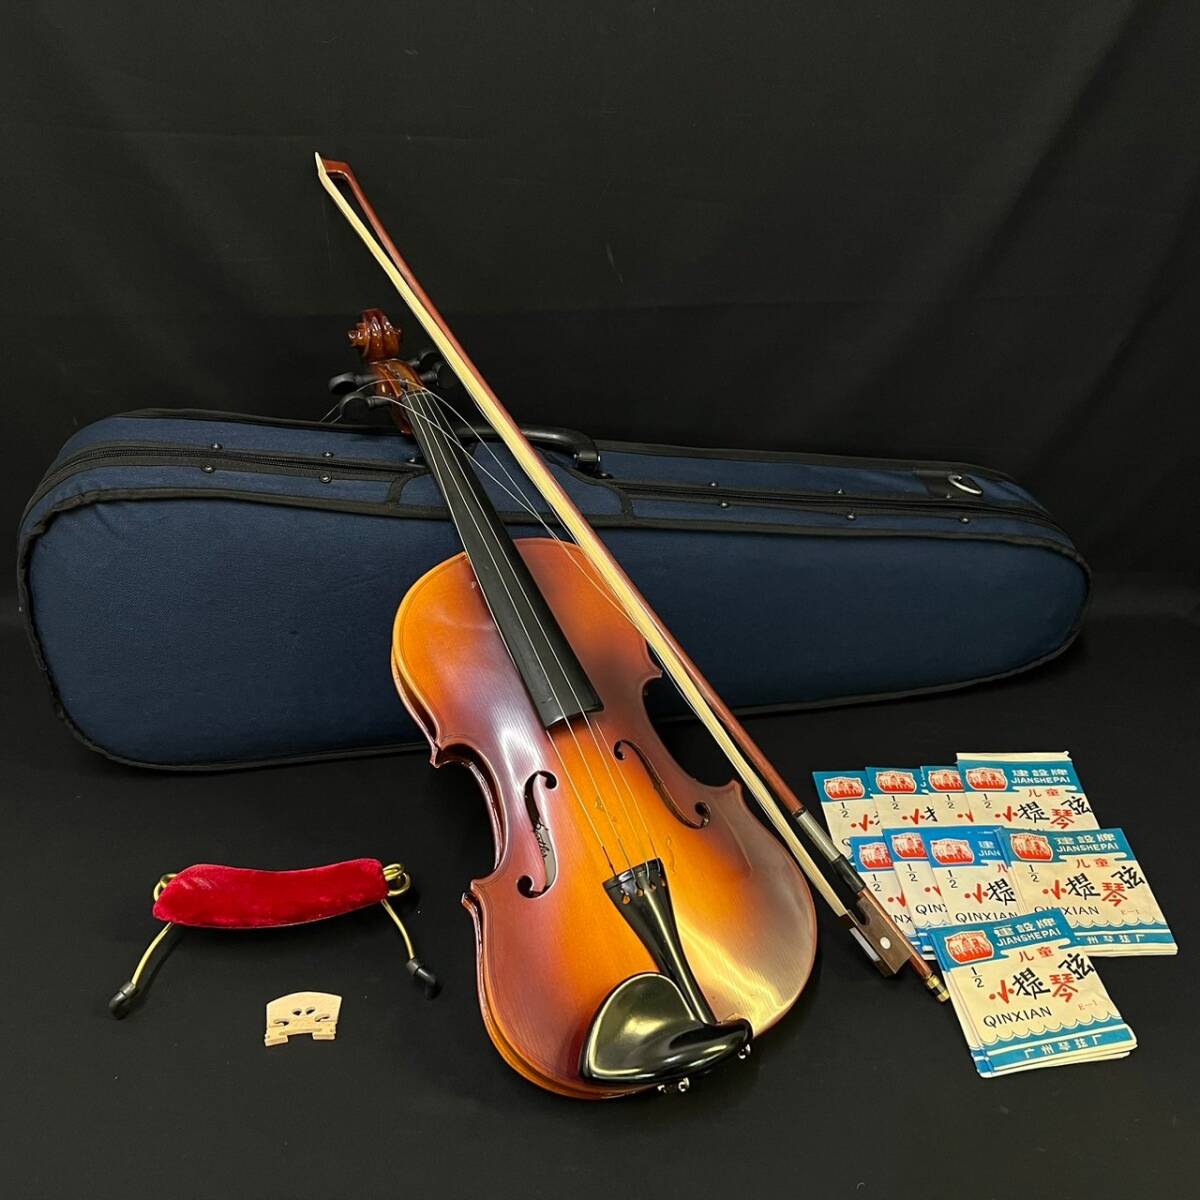 BCg311I 120 Bestler ベスラー ヴァイオリン 上海 中国 茶色 ハードケース 弓 あご当て 付 バイオリン 弦楽器 楽器 Shanghaiの画像1